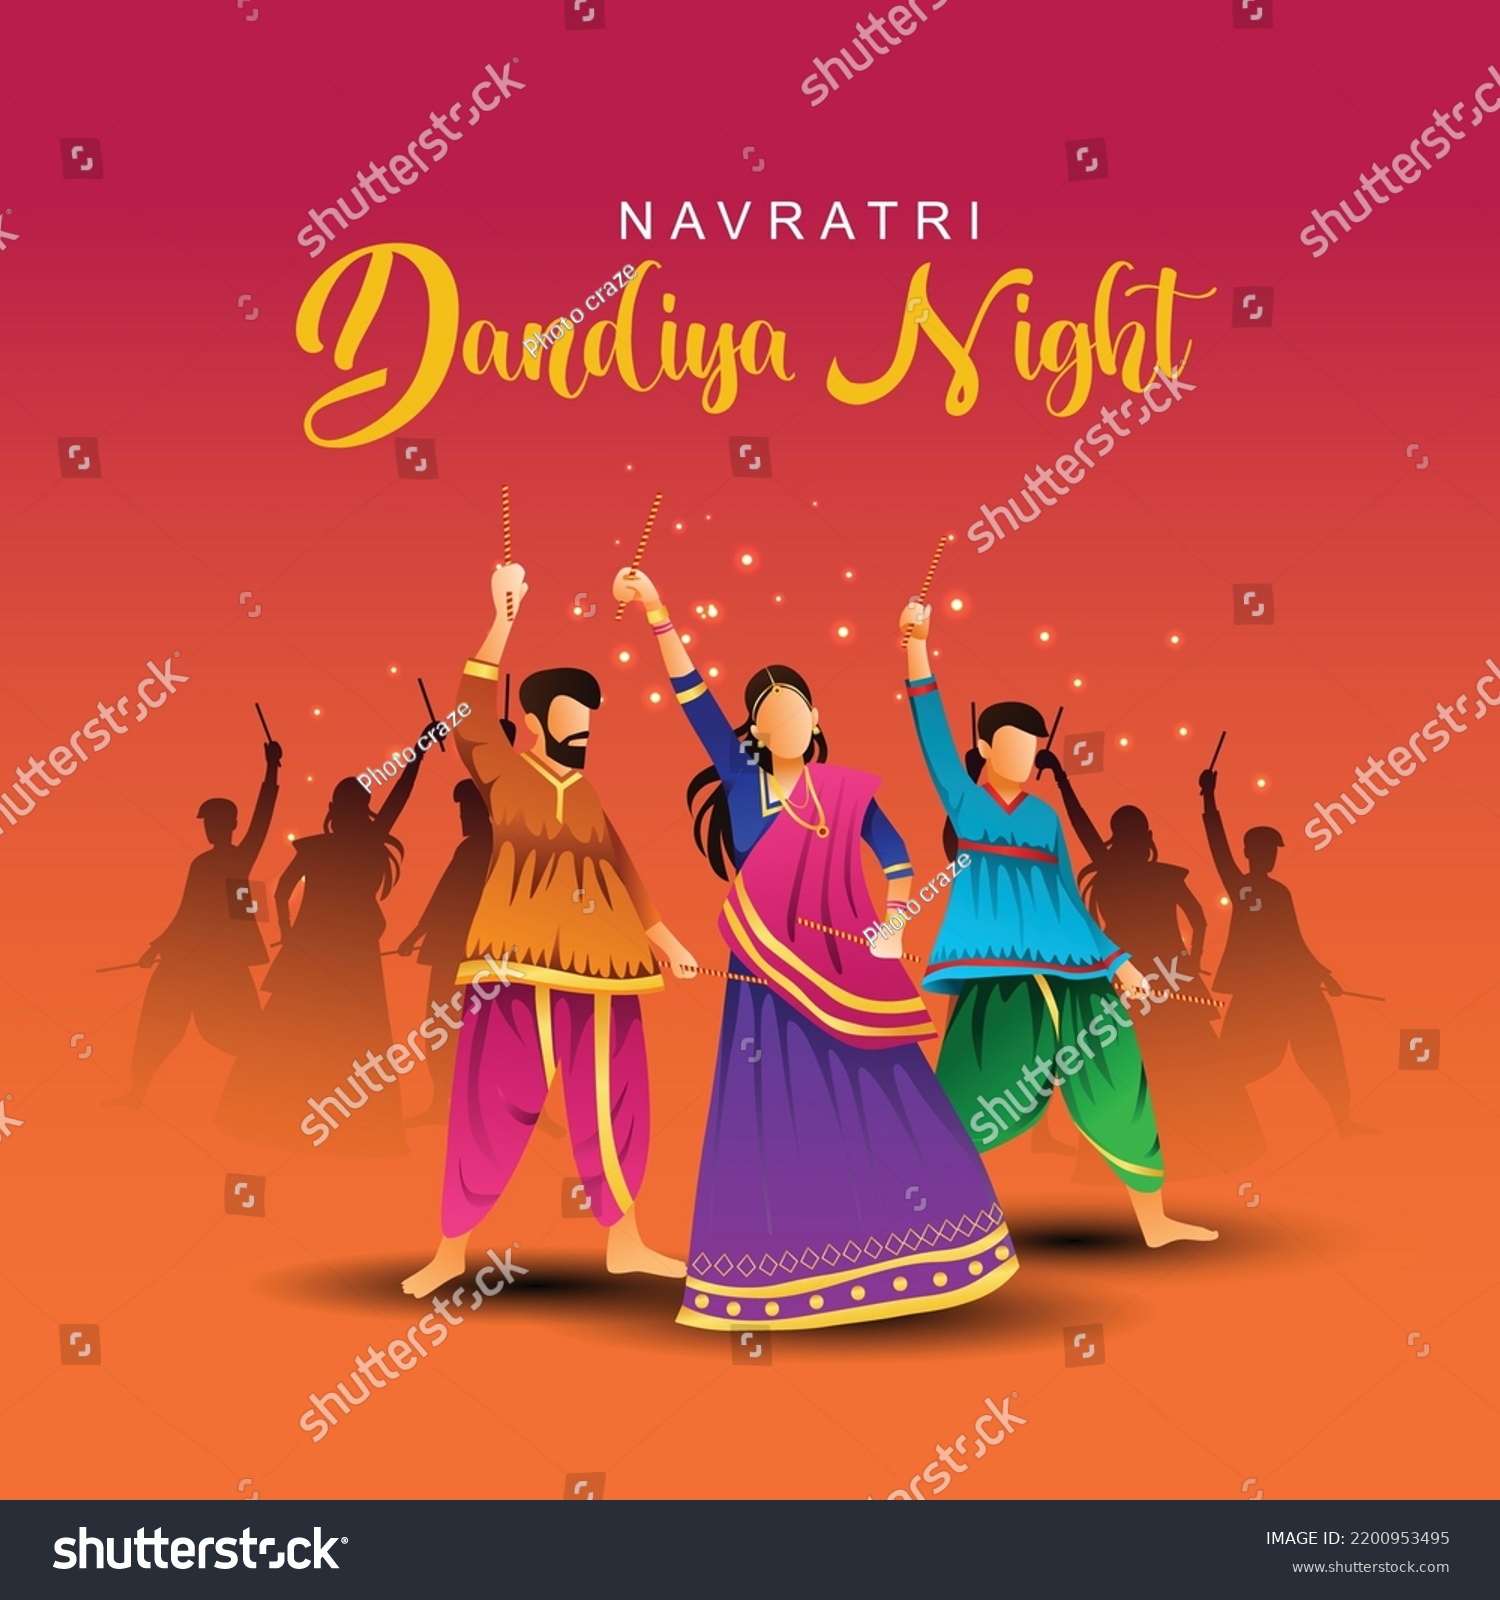 SVG of Garba Night poster for Navratri Dussehra festival of India. vector illustration design of peoples playing Dandiya dance. svg